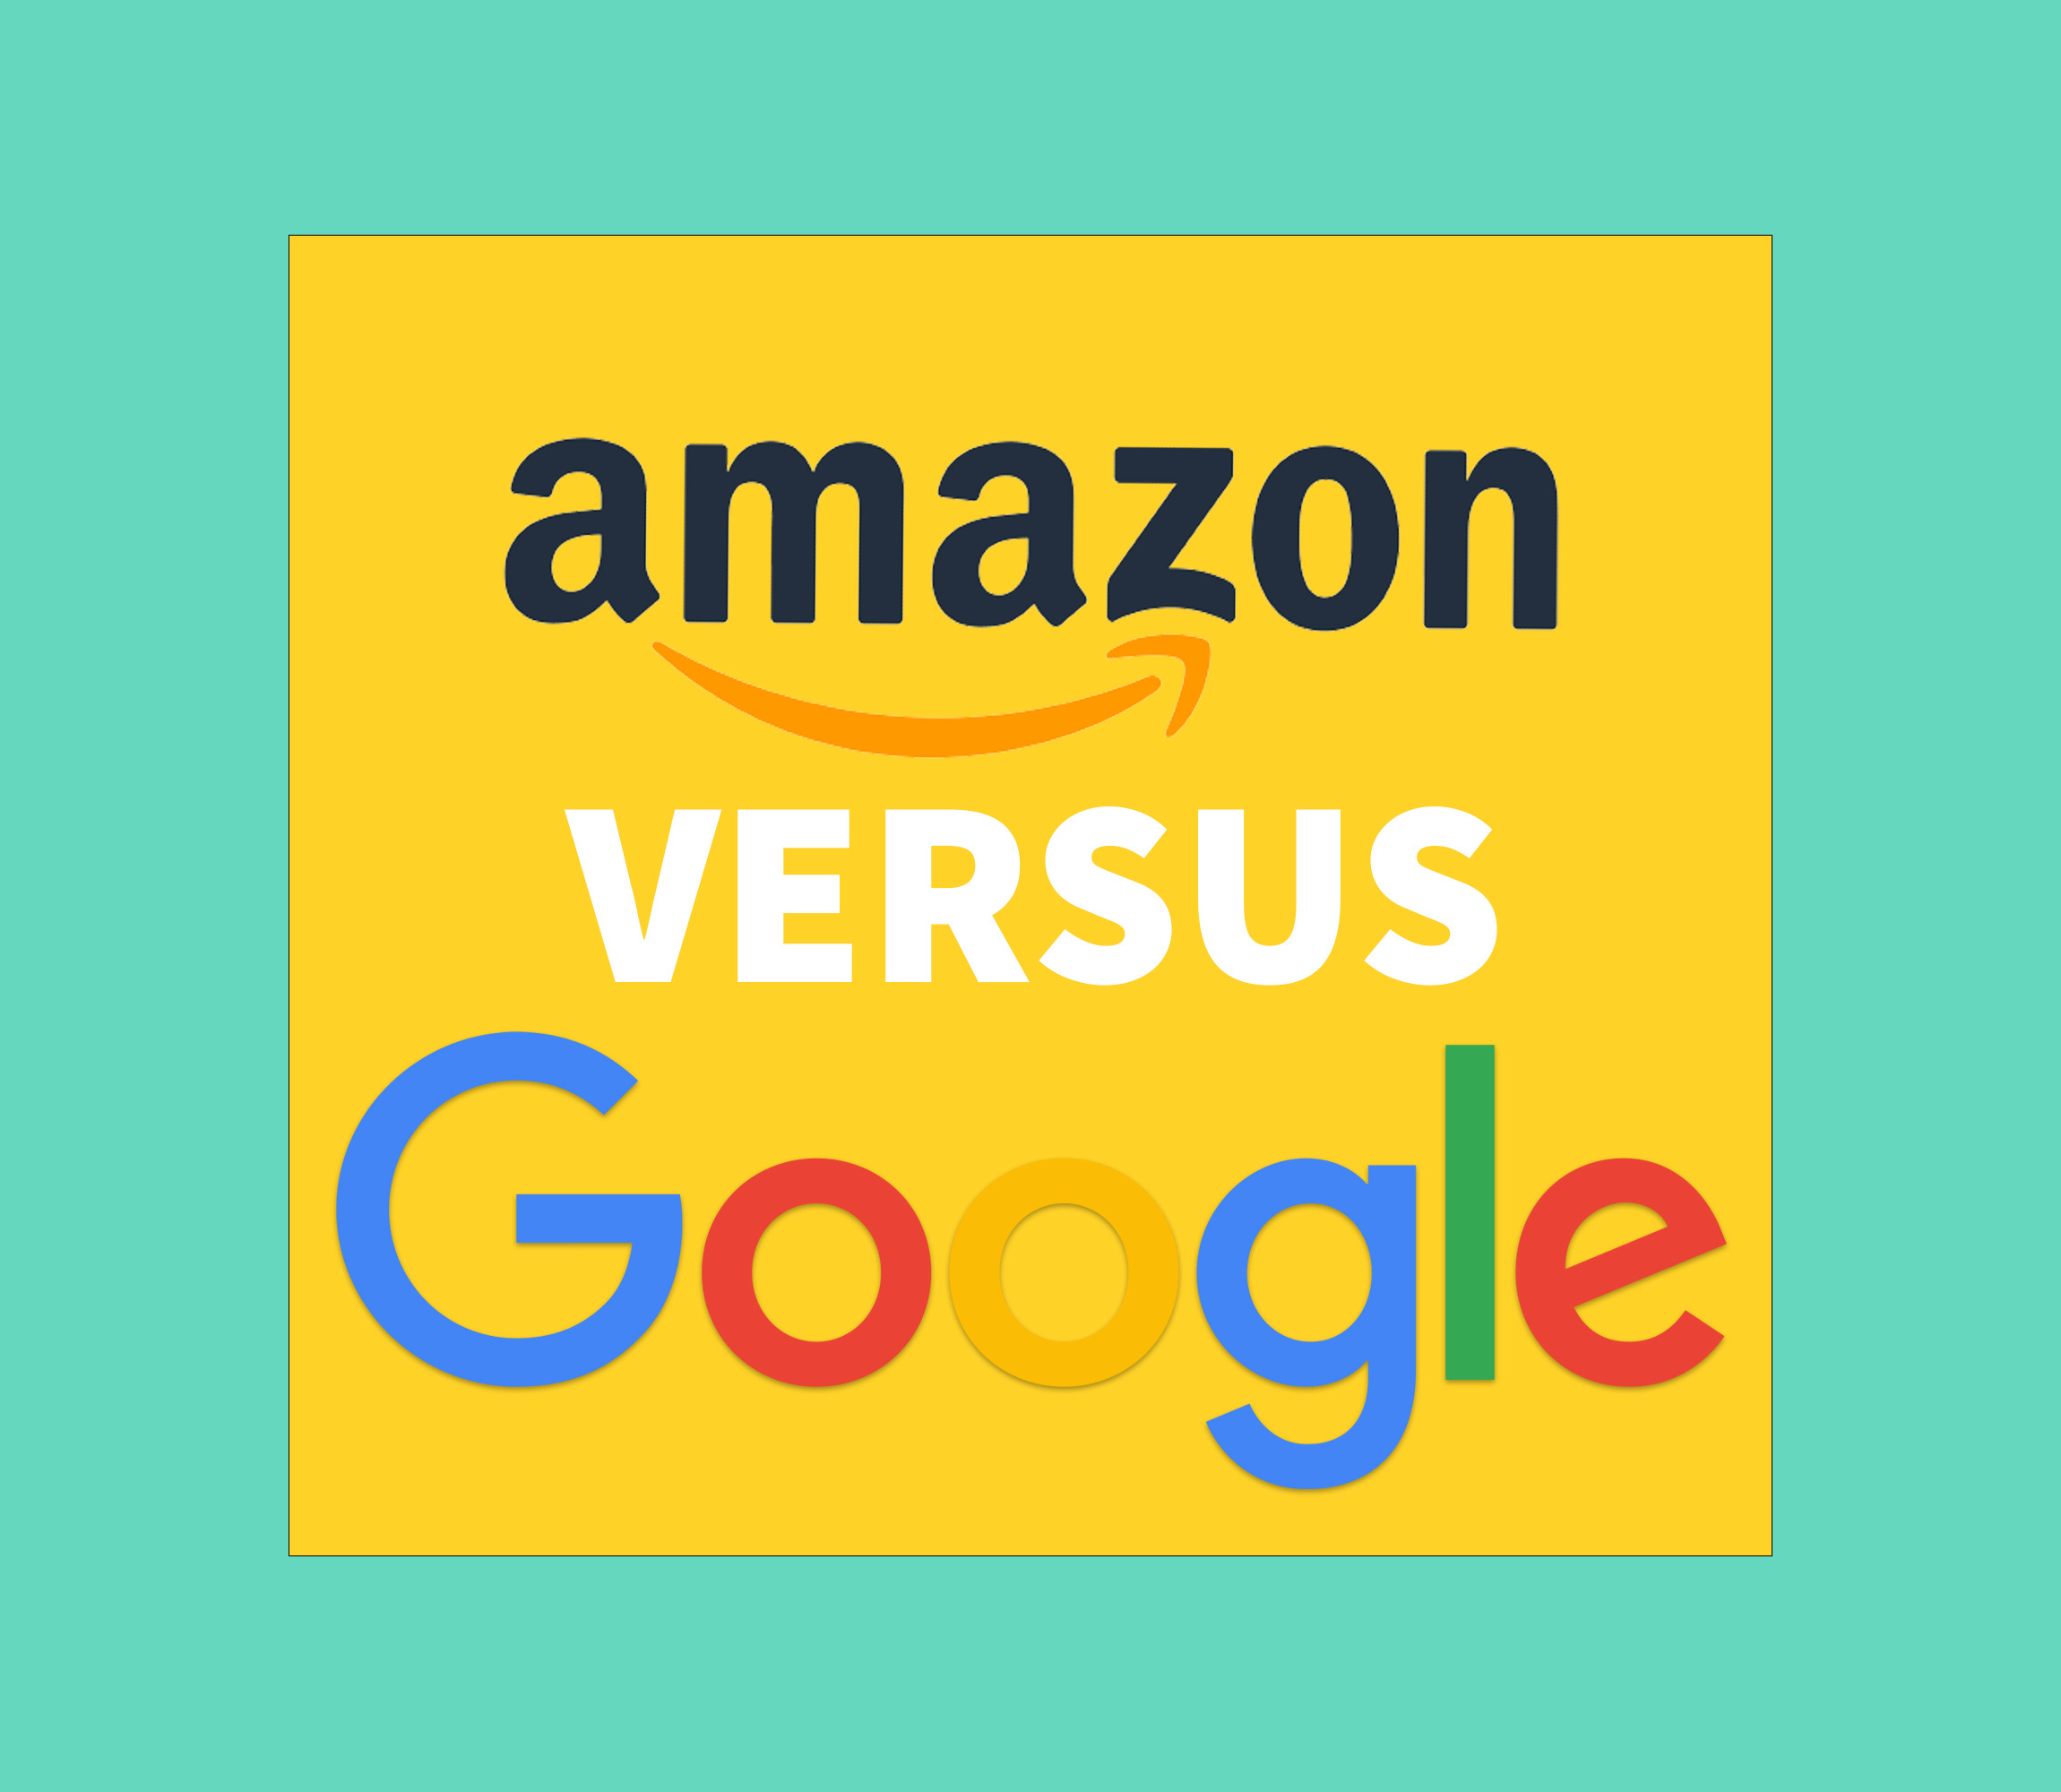 Amazon versus Google